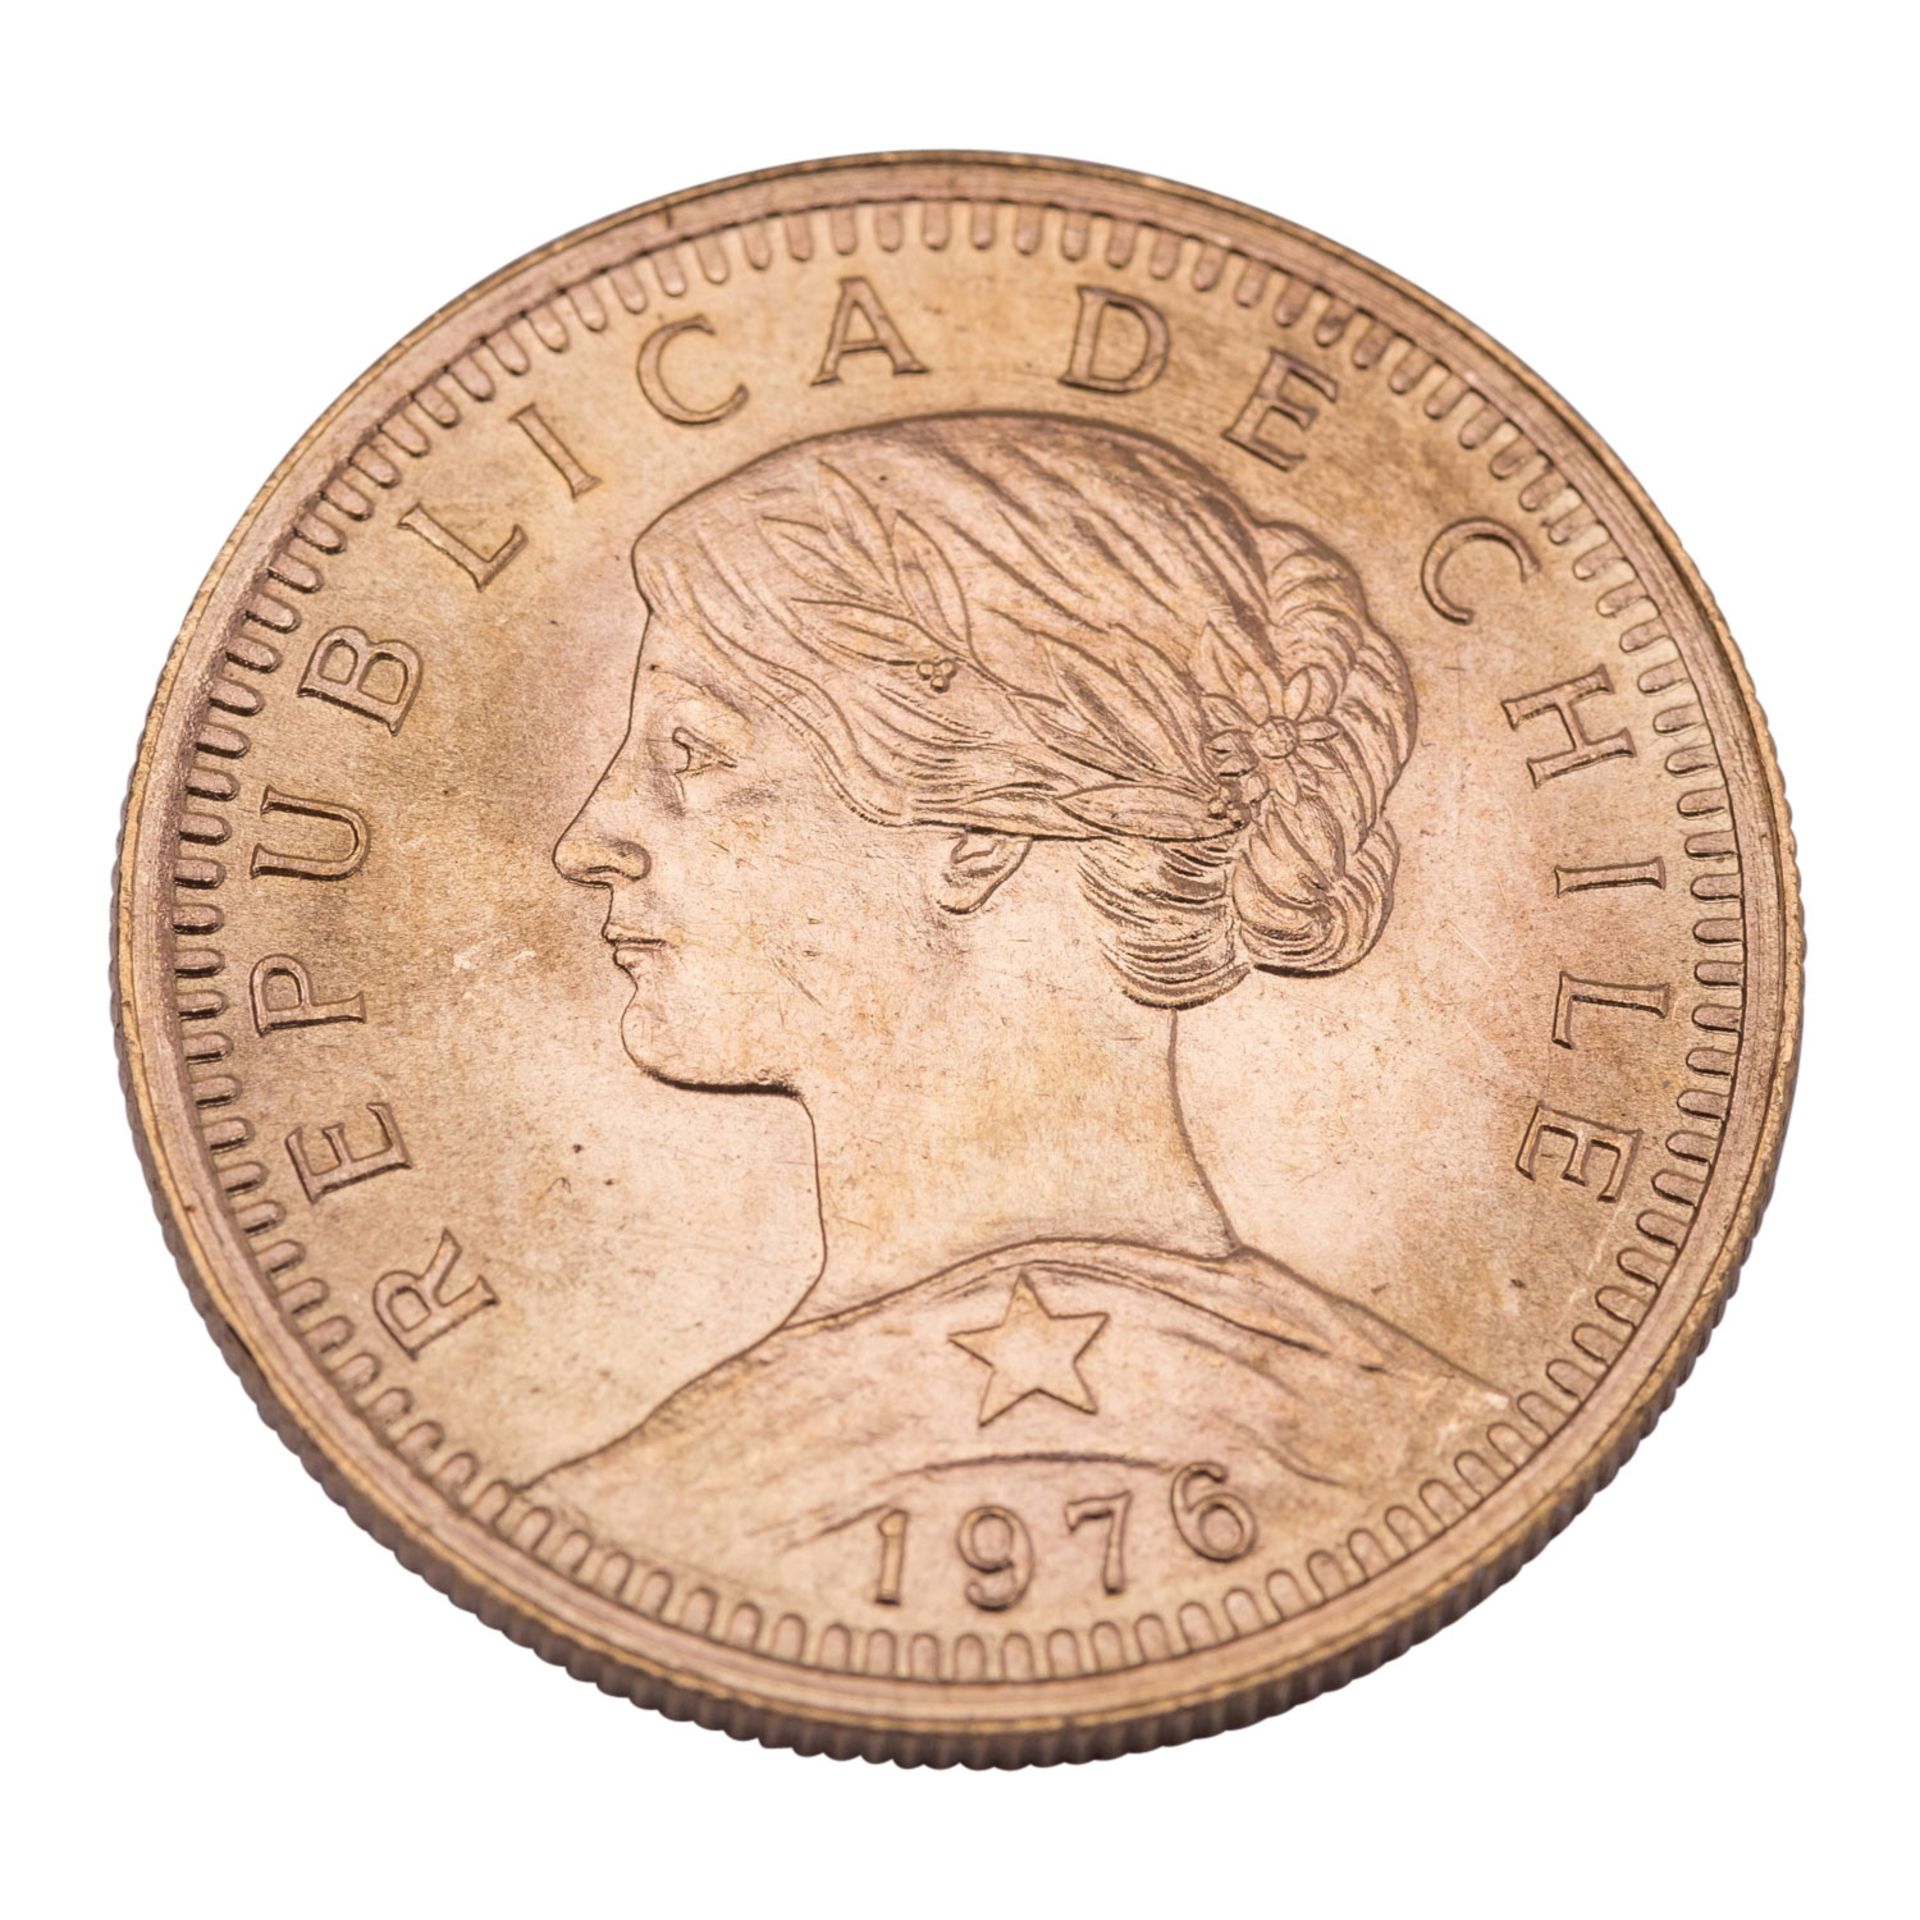 Chile - 20 Pesos 1976, Liberty, GOLD,